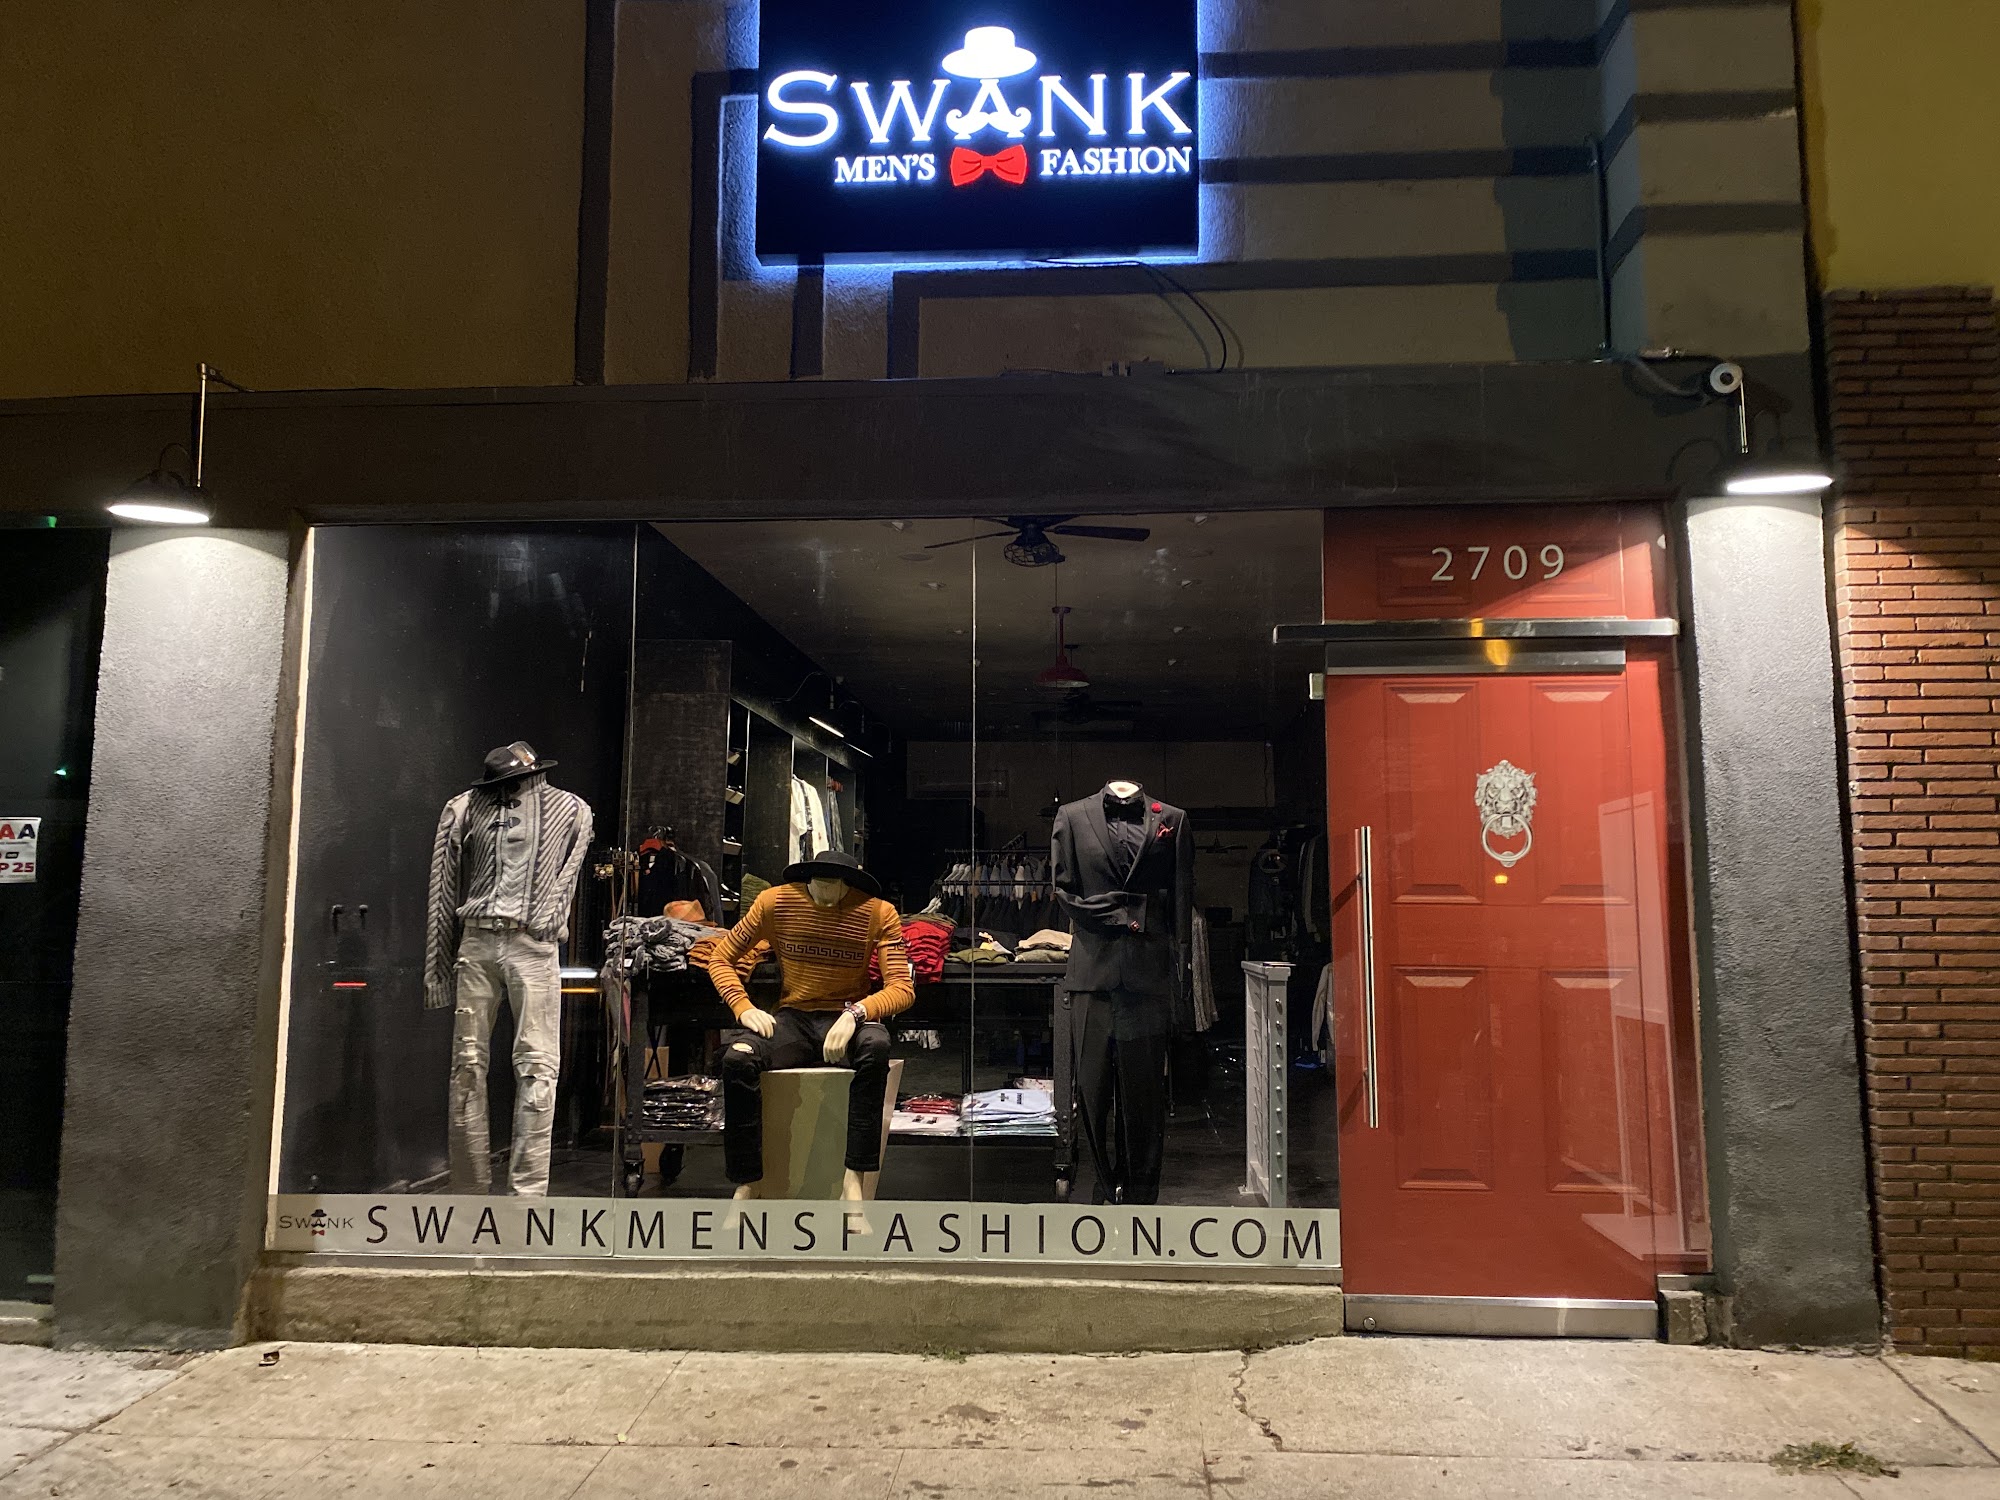 Swank Men's Fashion